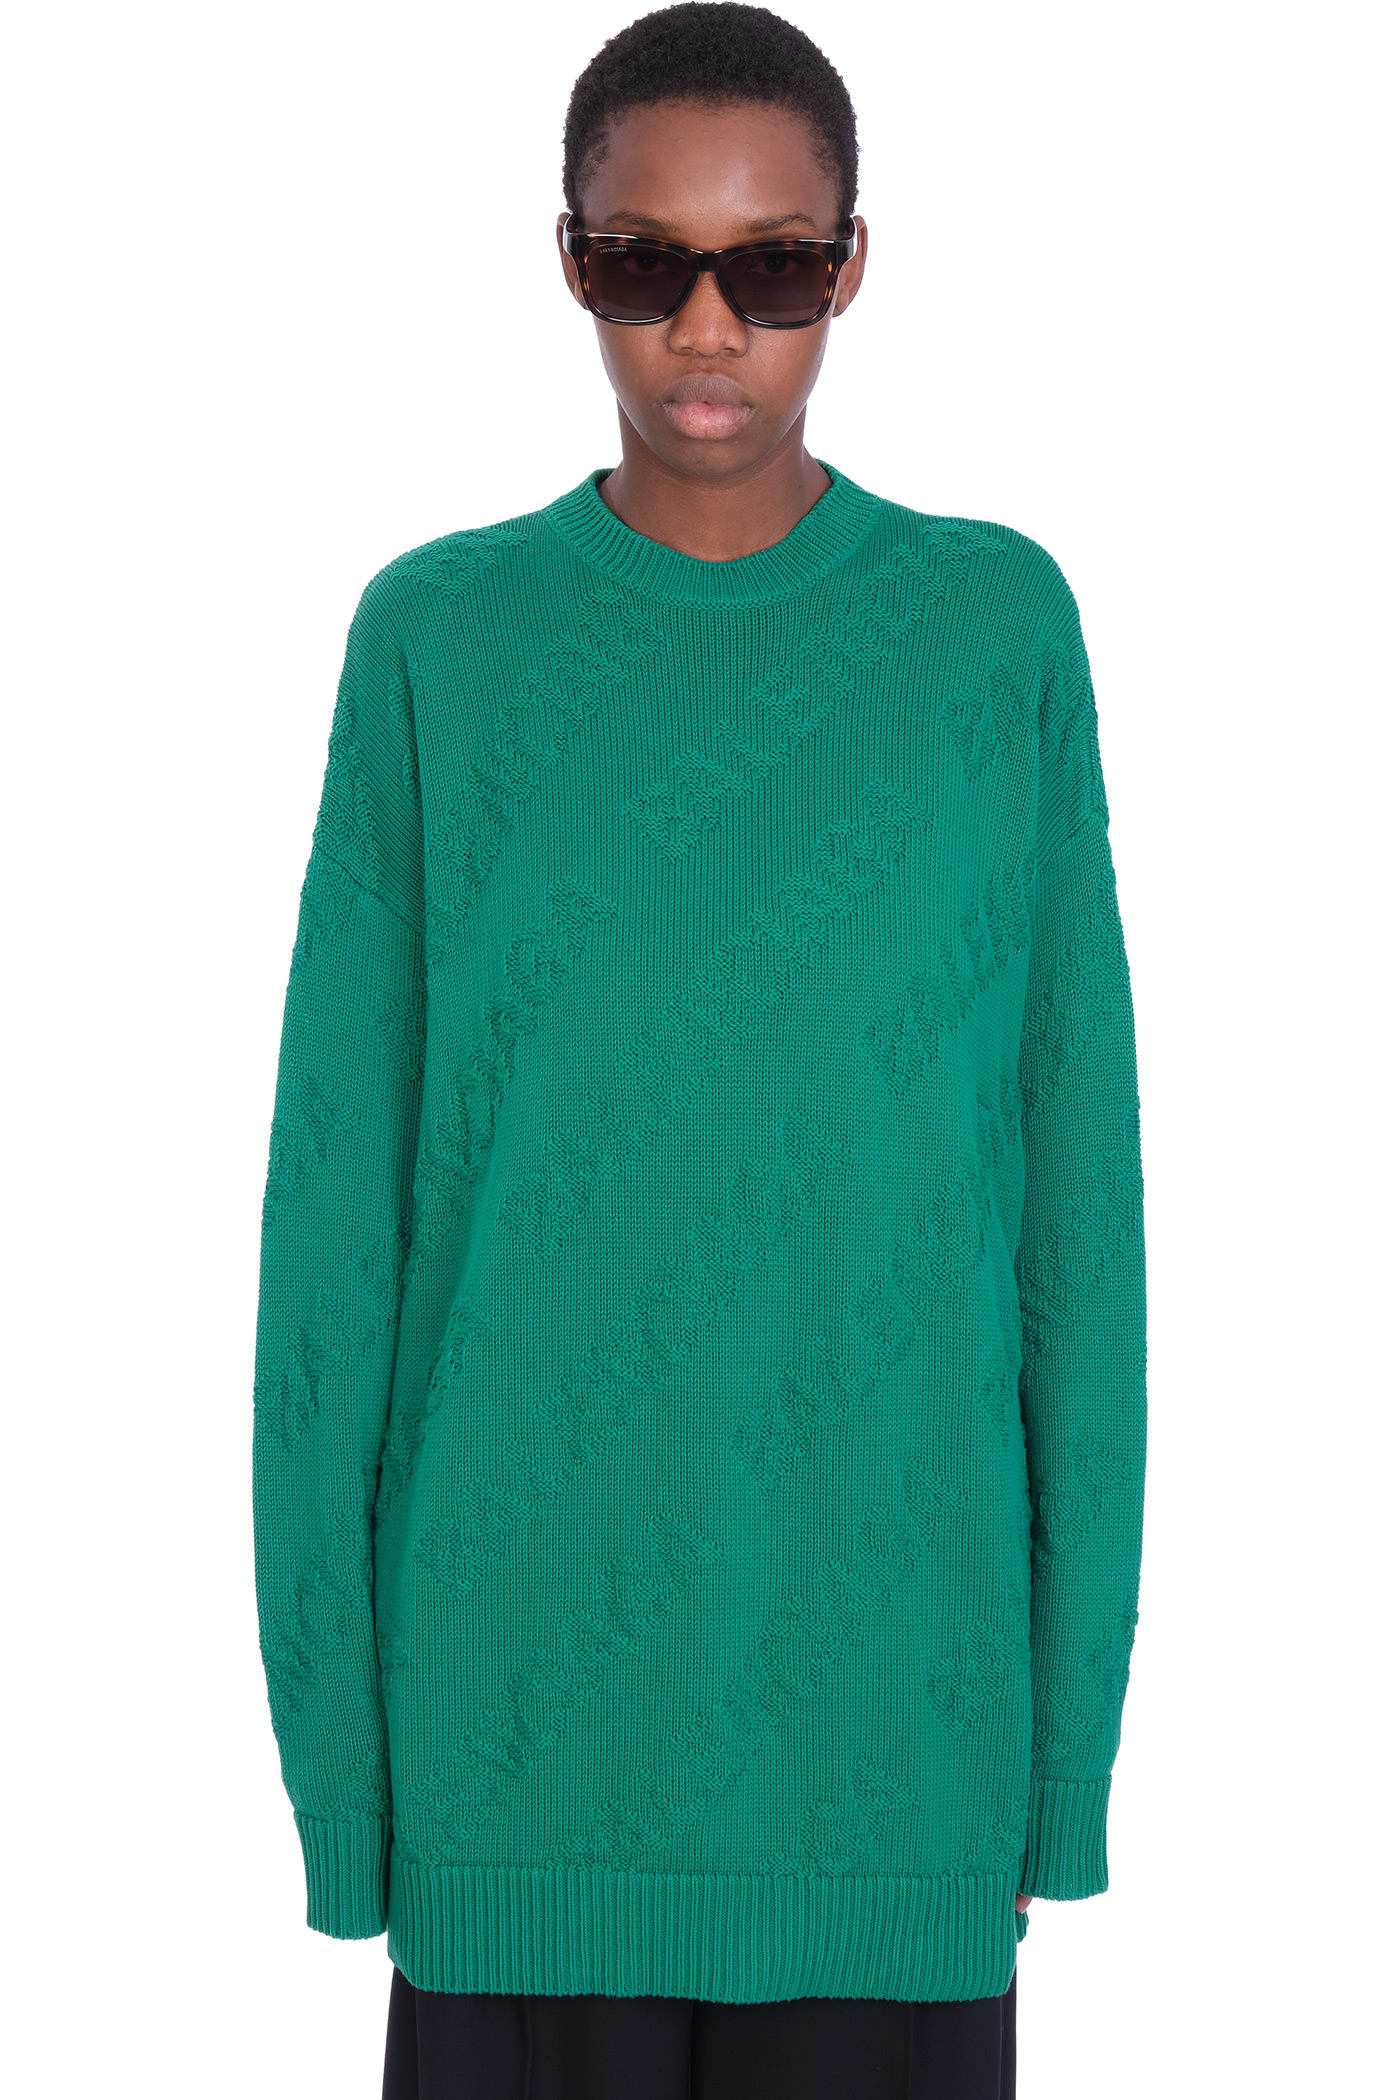 Balenciaga Knitwear In Green Cotton